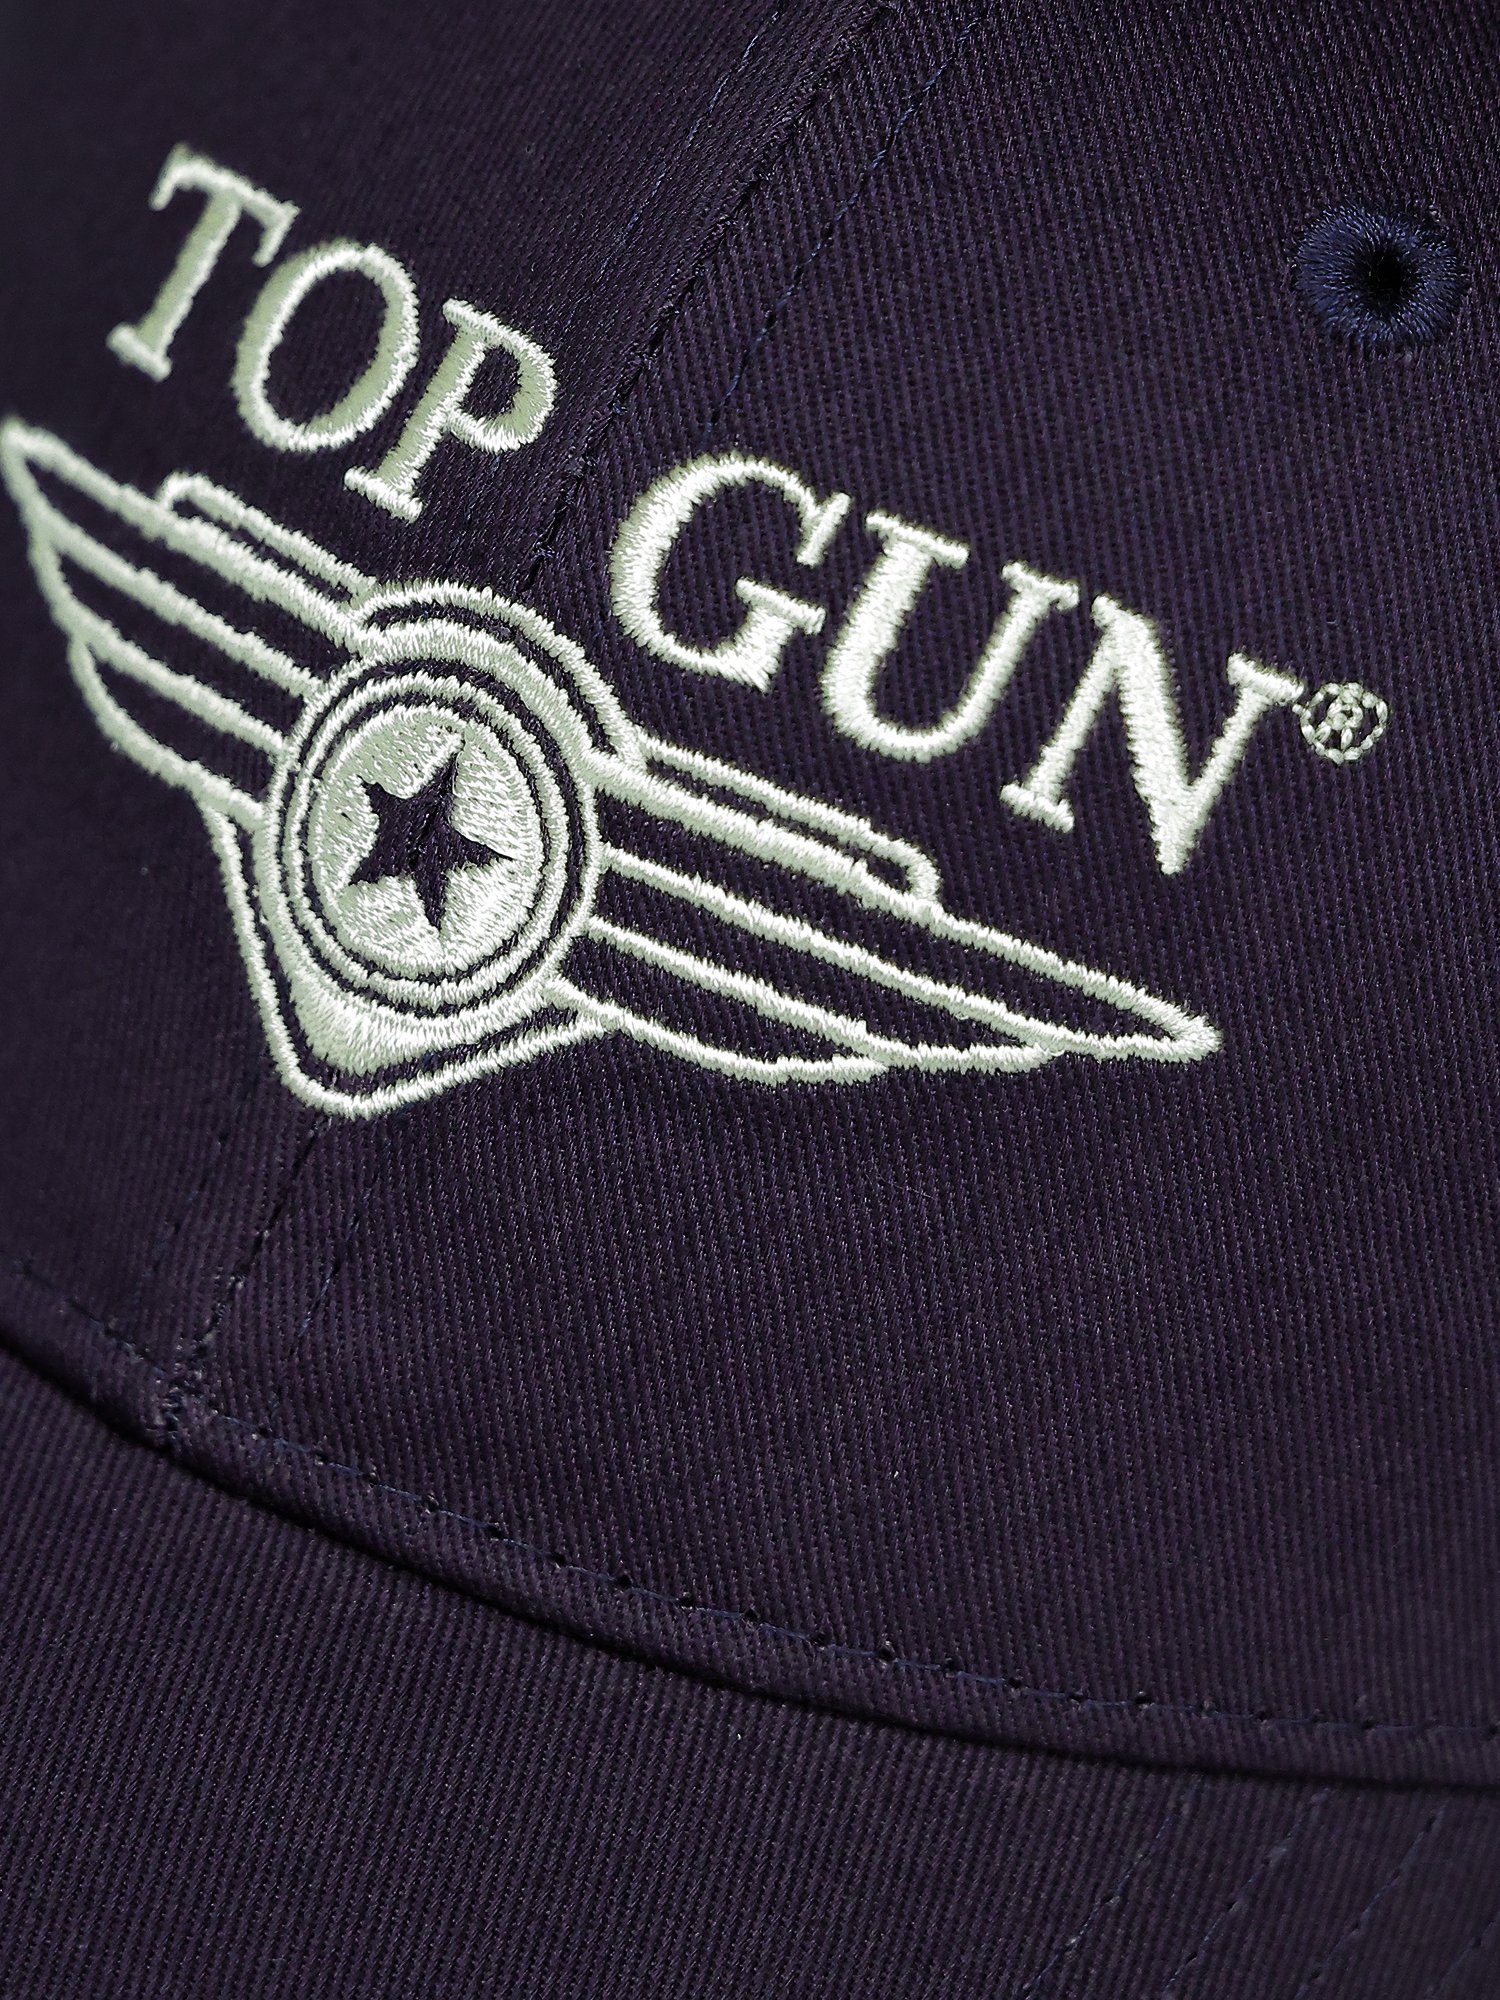 TG22013 TOP Snapback Cap GUN navy